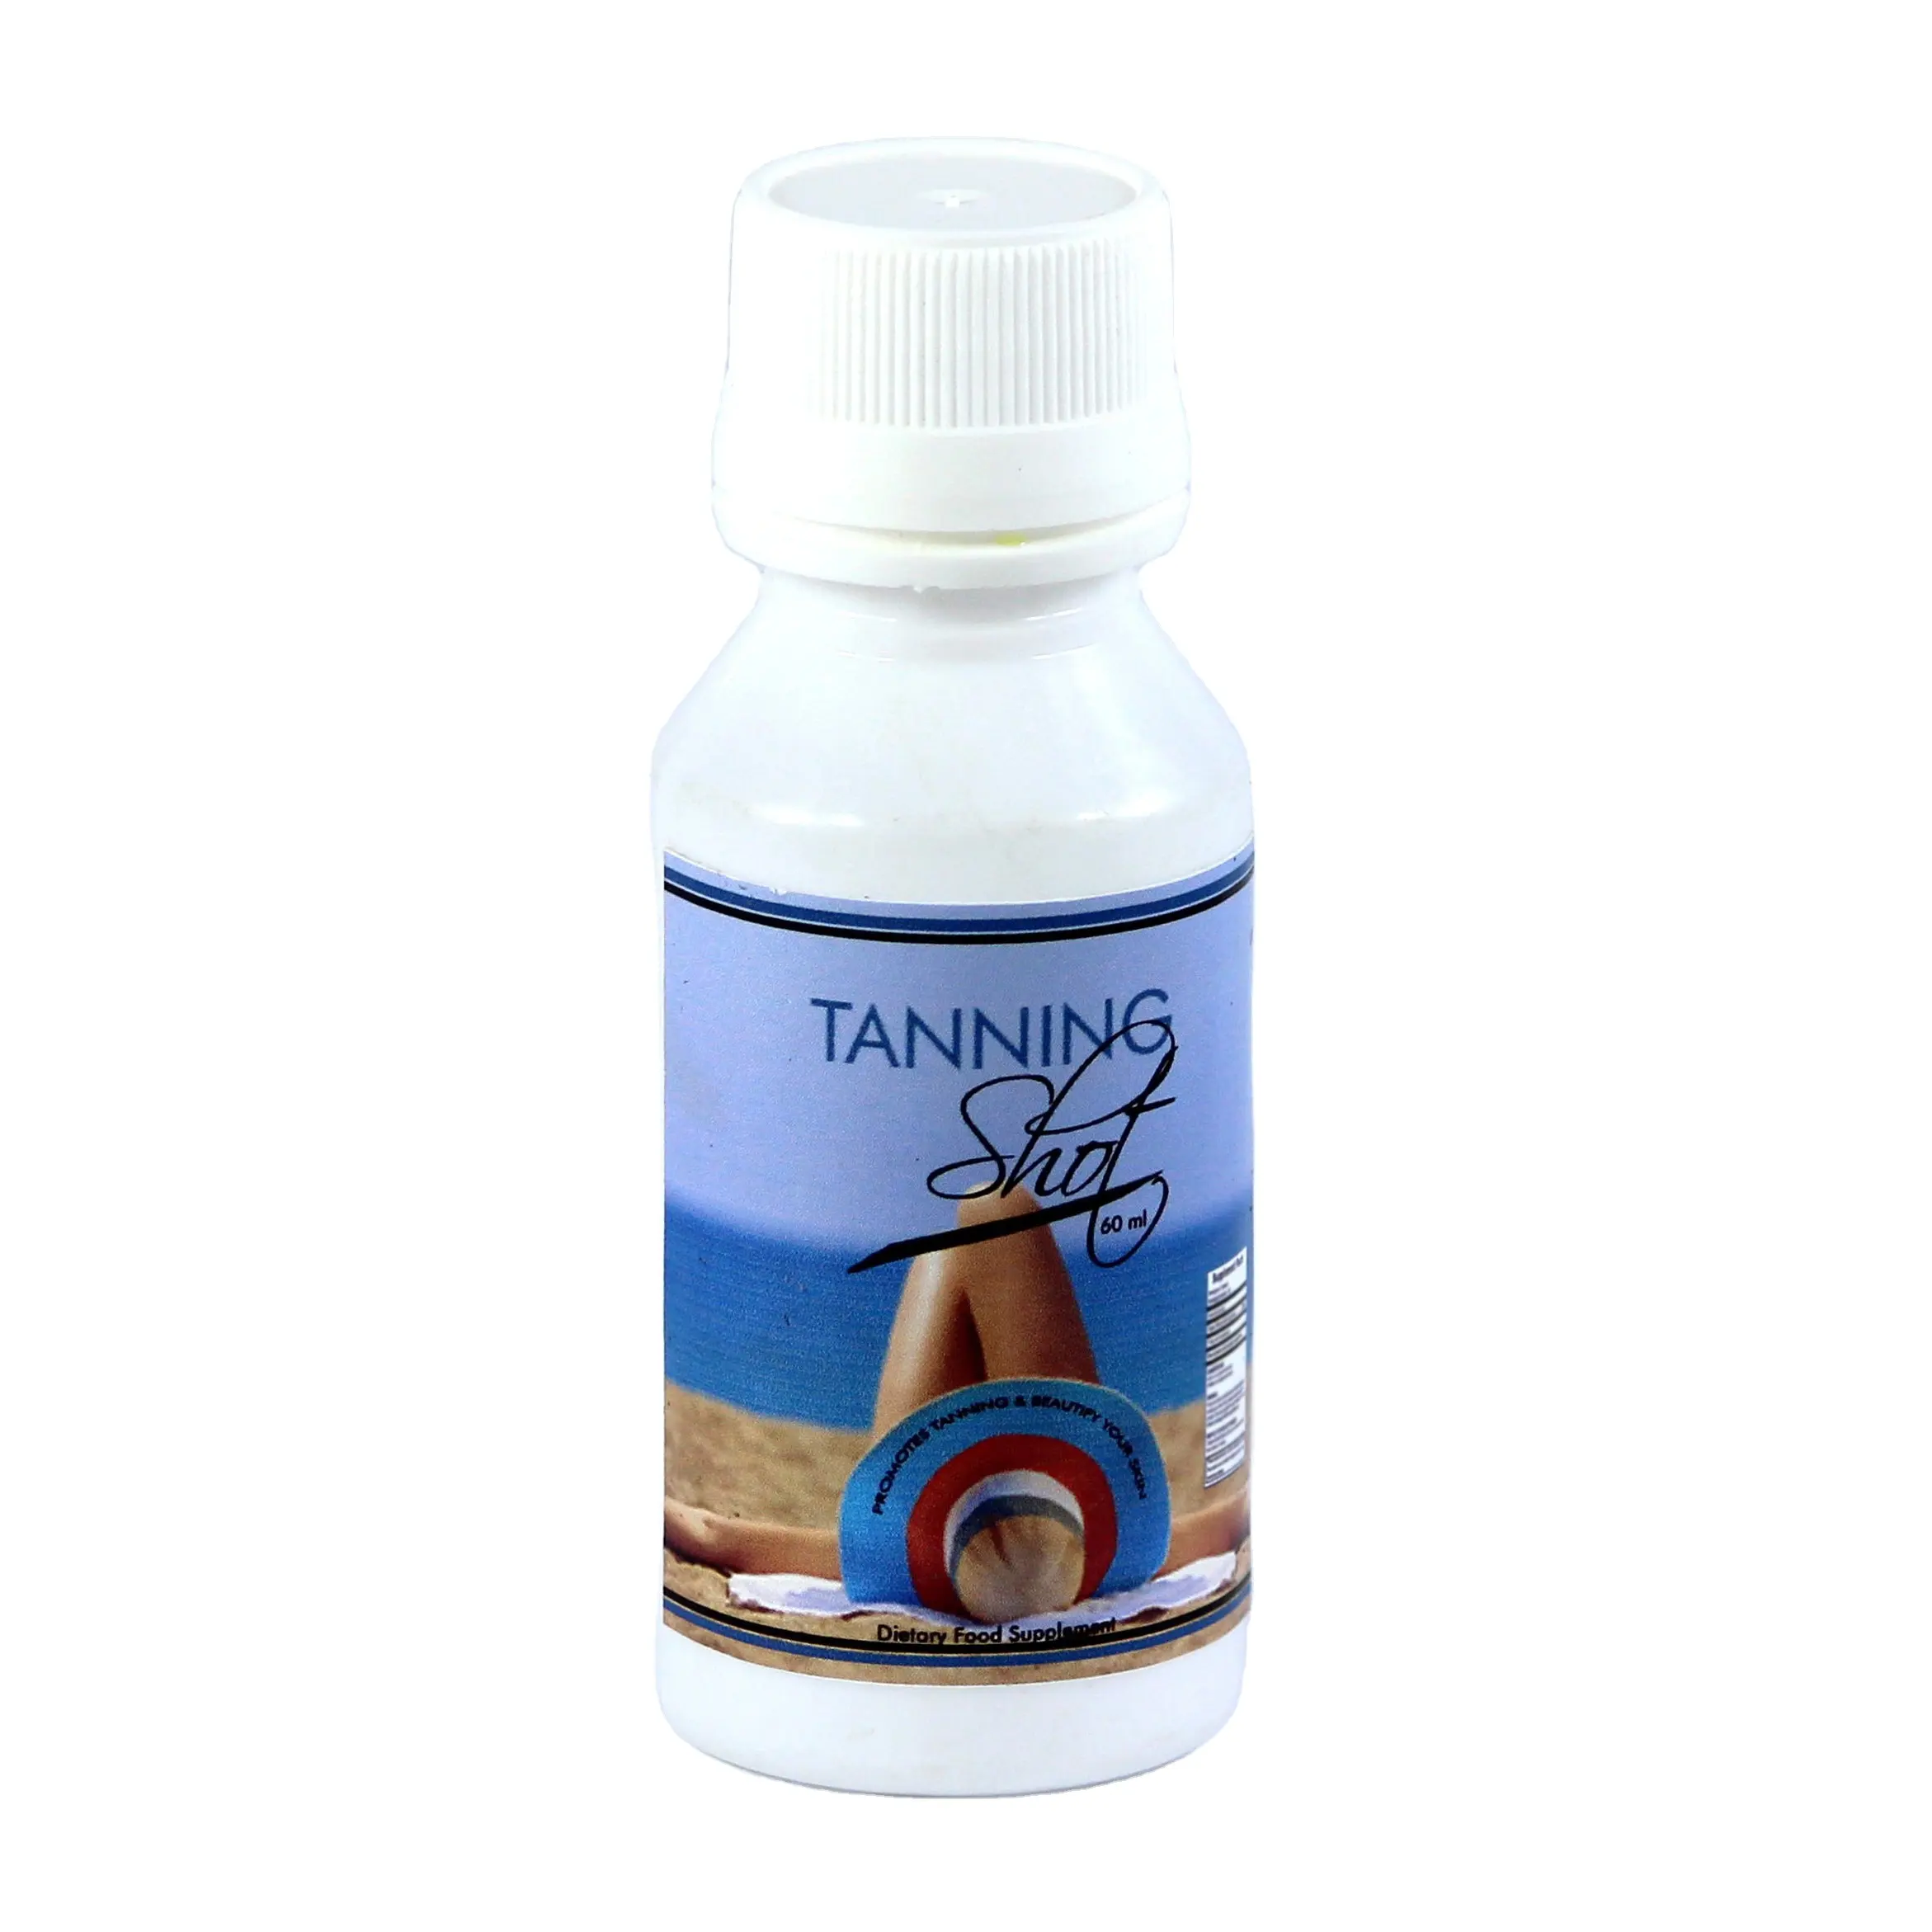 Promotes natural collagen tan shot for beautiful skin